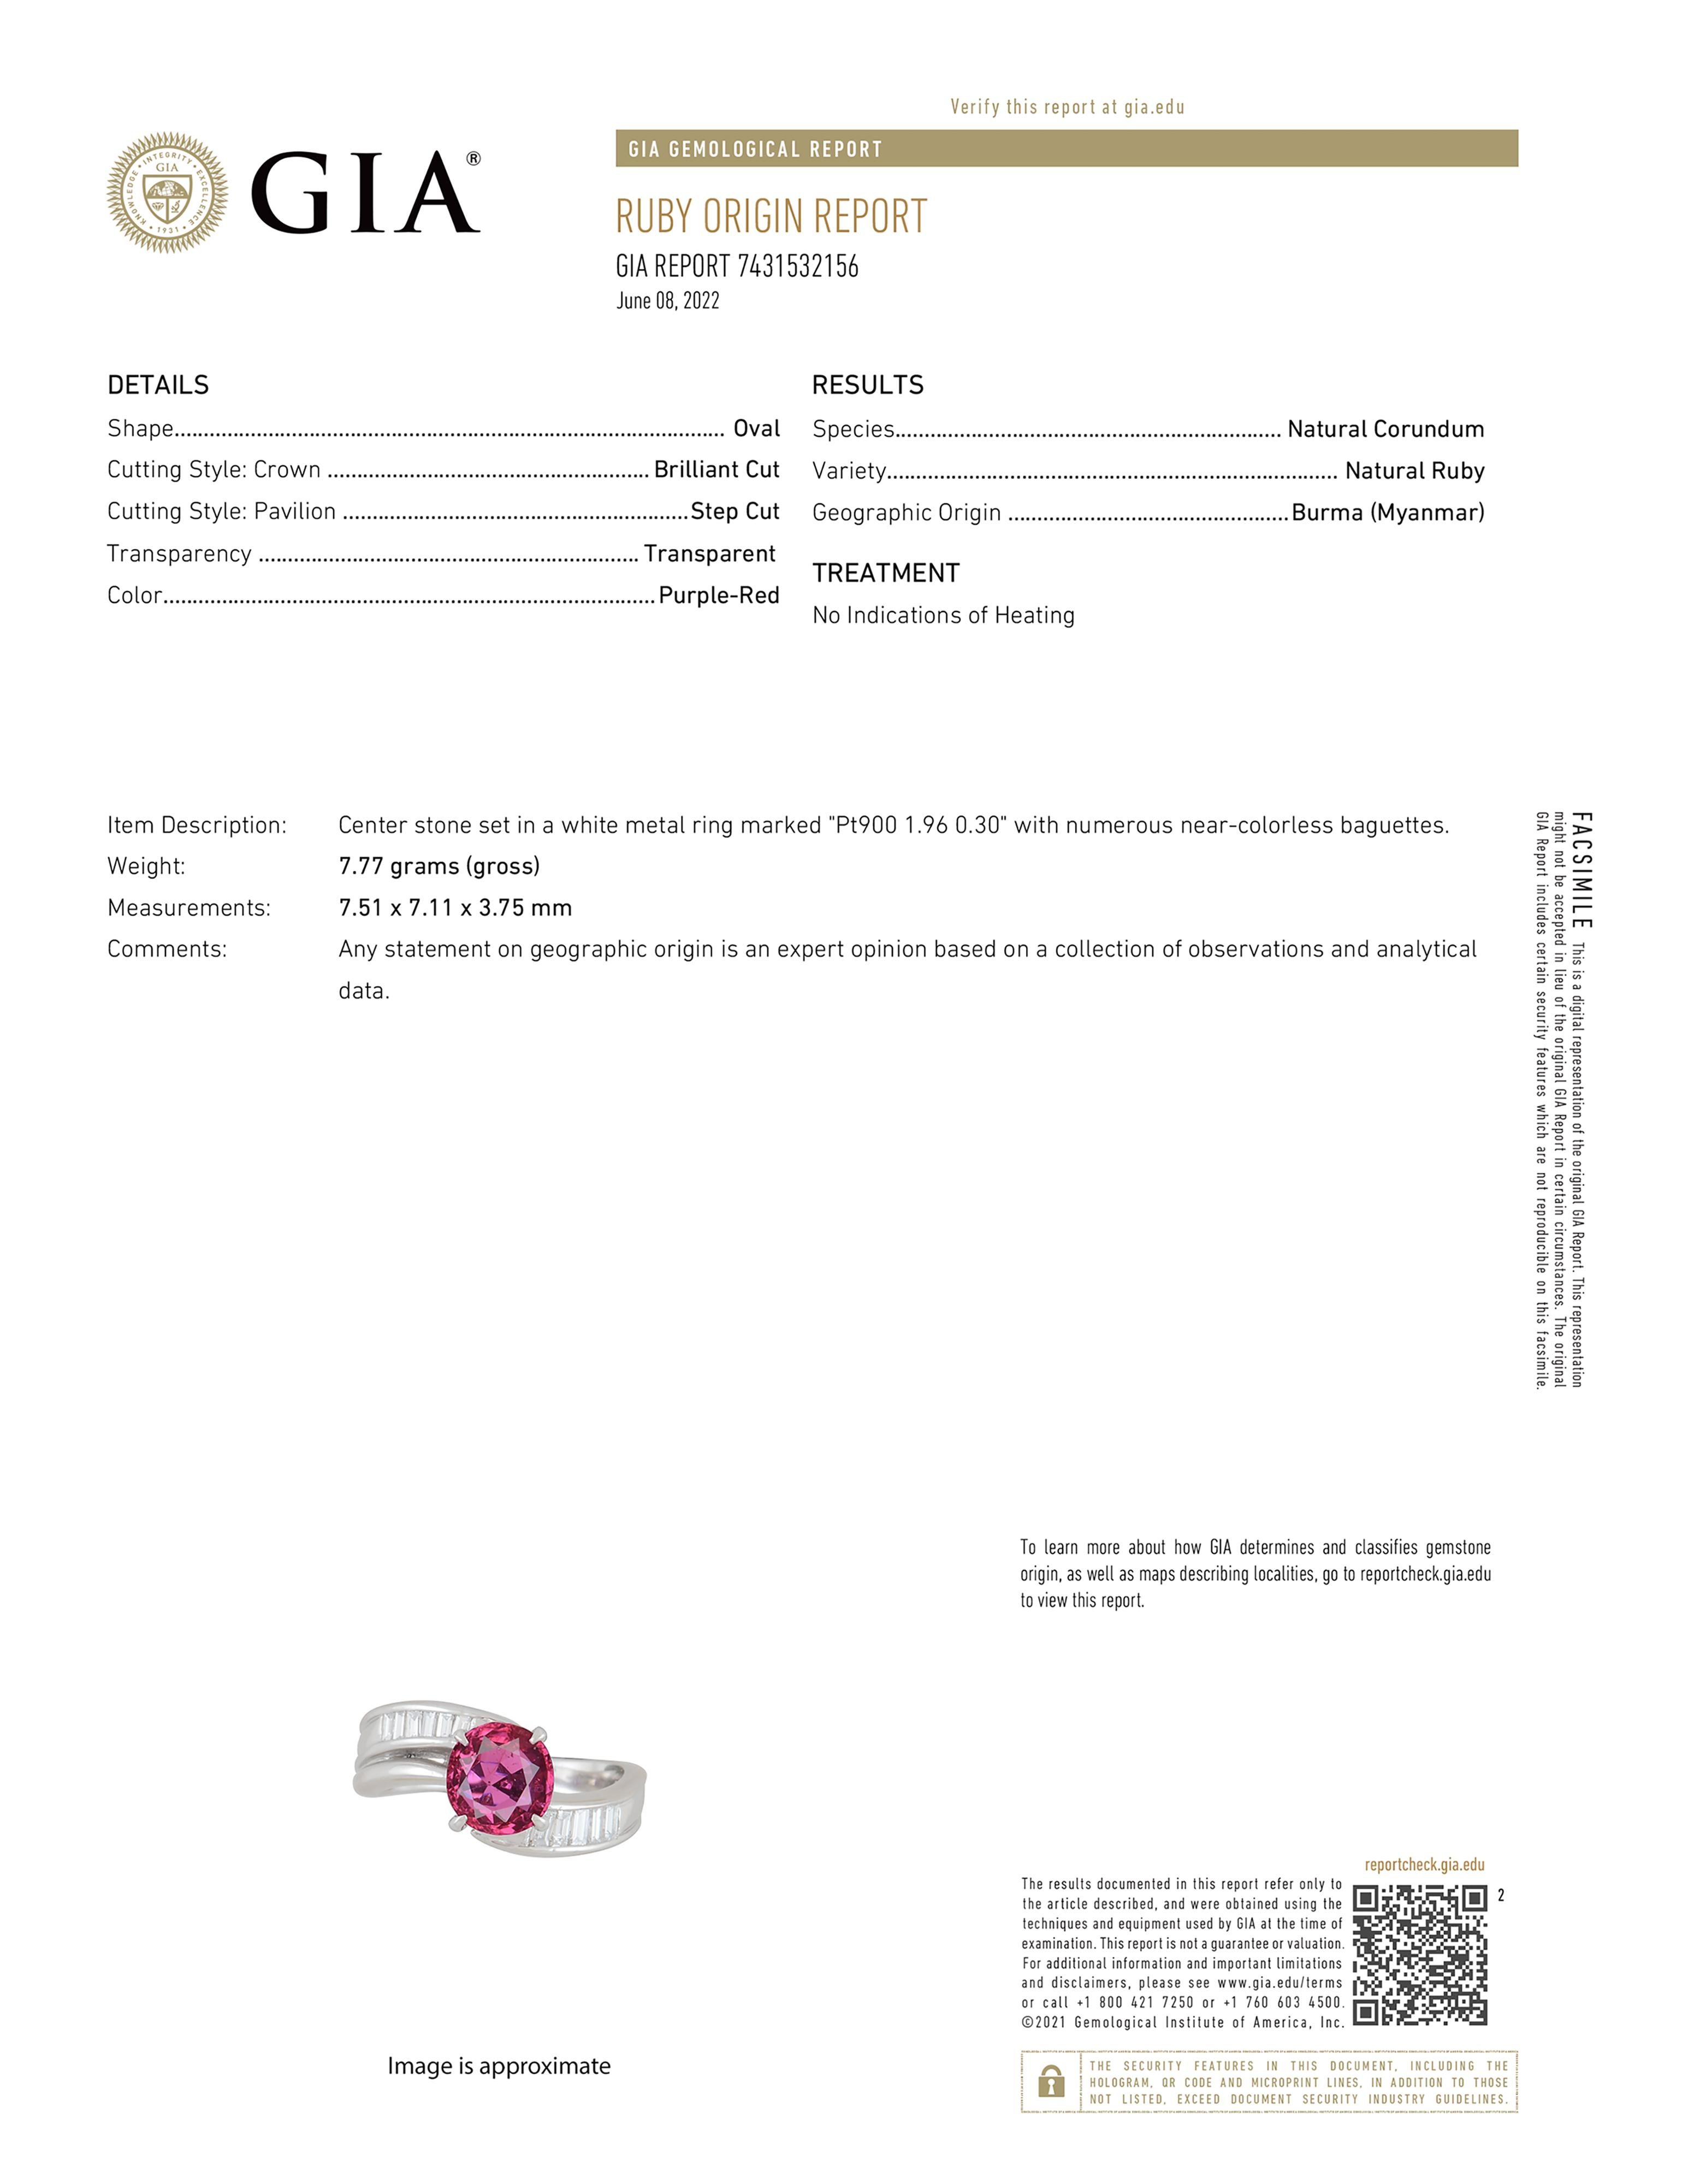 Oval Cut GIA Certified 2 Carat No Heat Burma Ruby Art Deco Ring For Sale